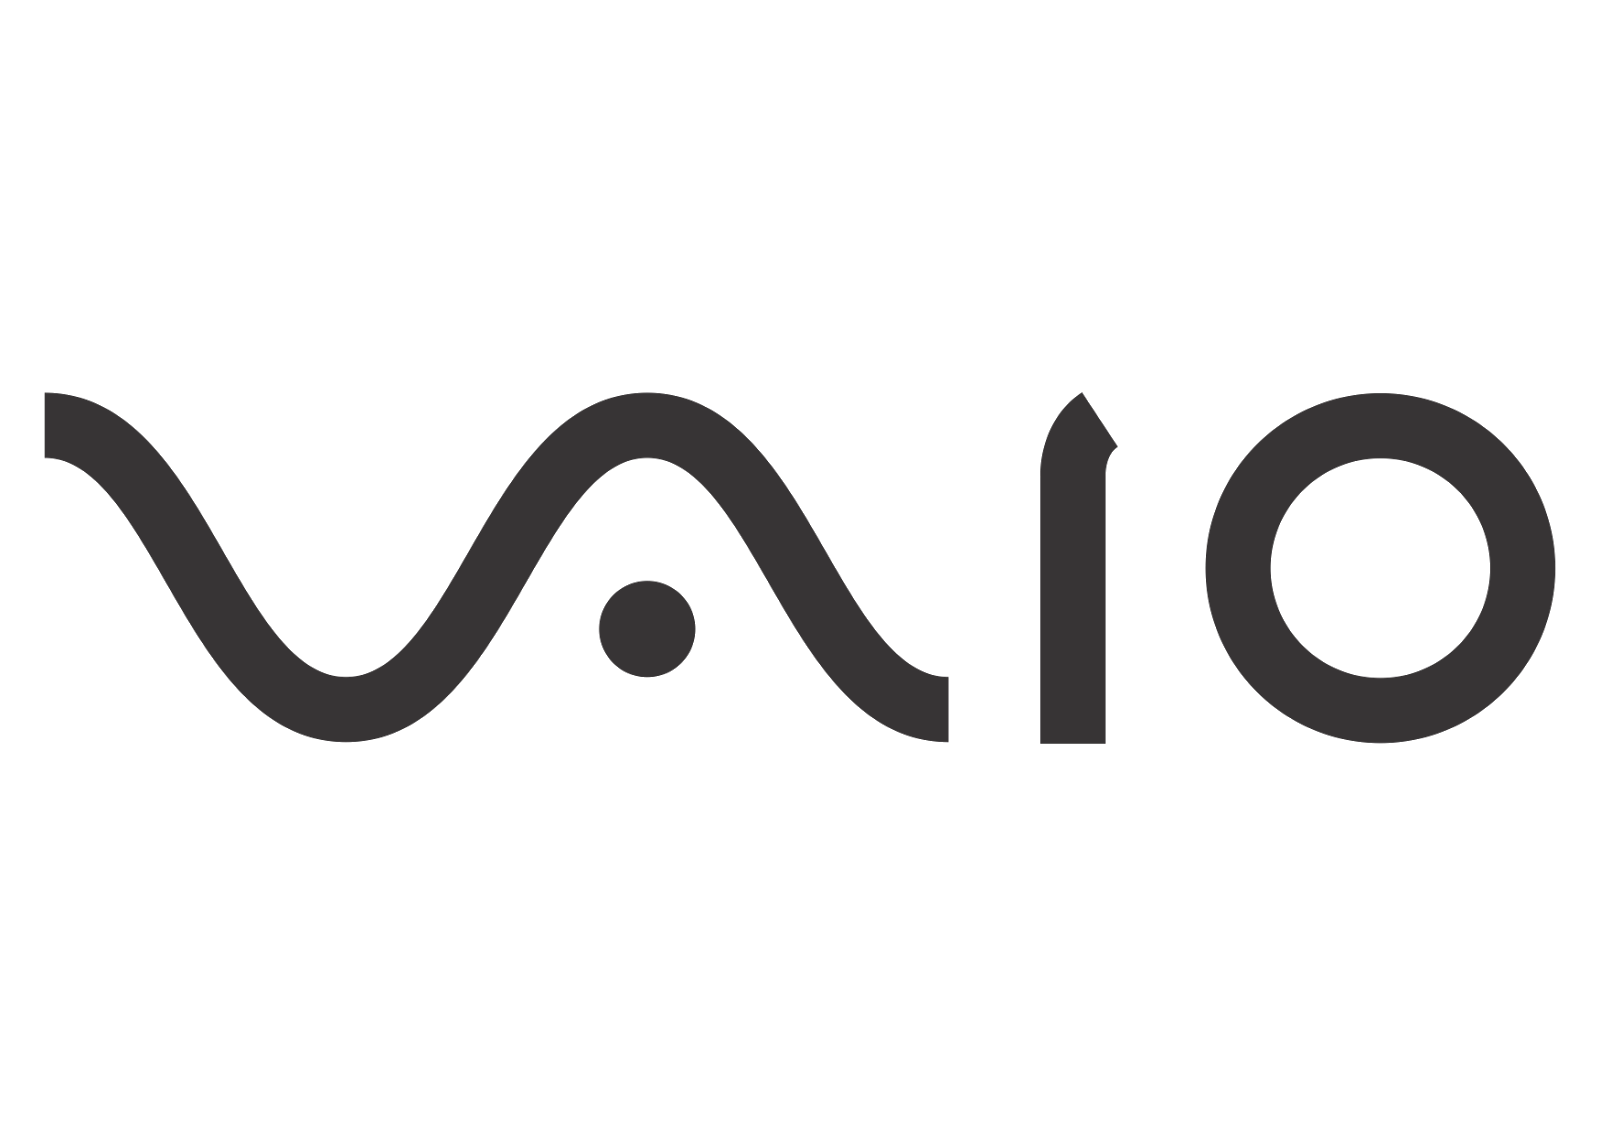 Logo Laptop Vaio Digital Sony Data Transparent Clipart